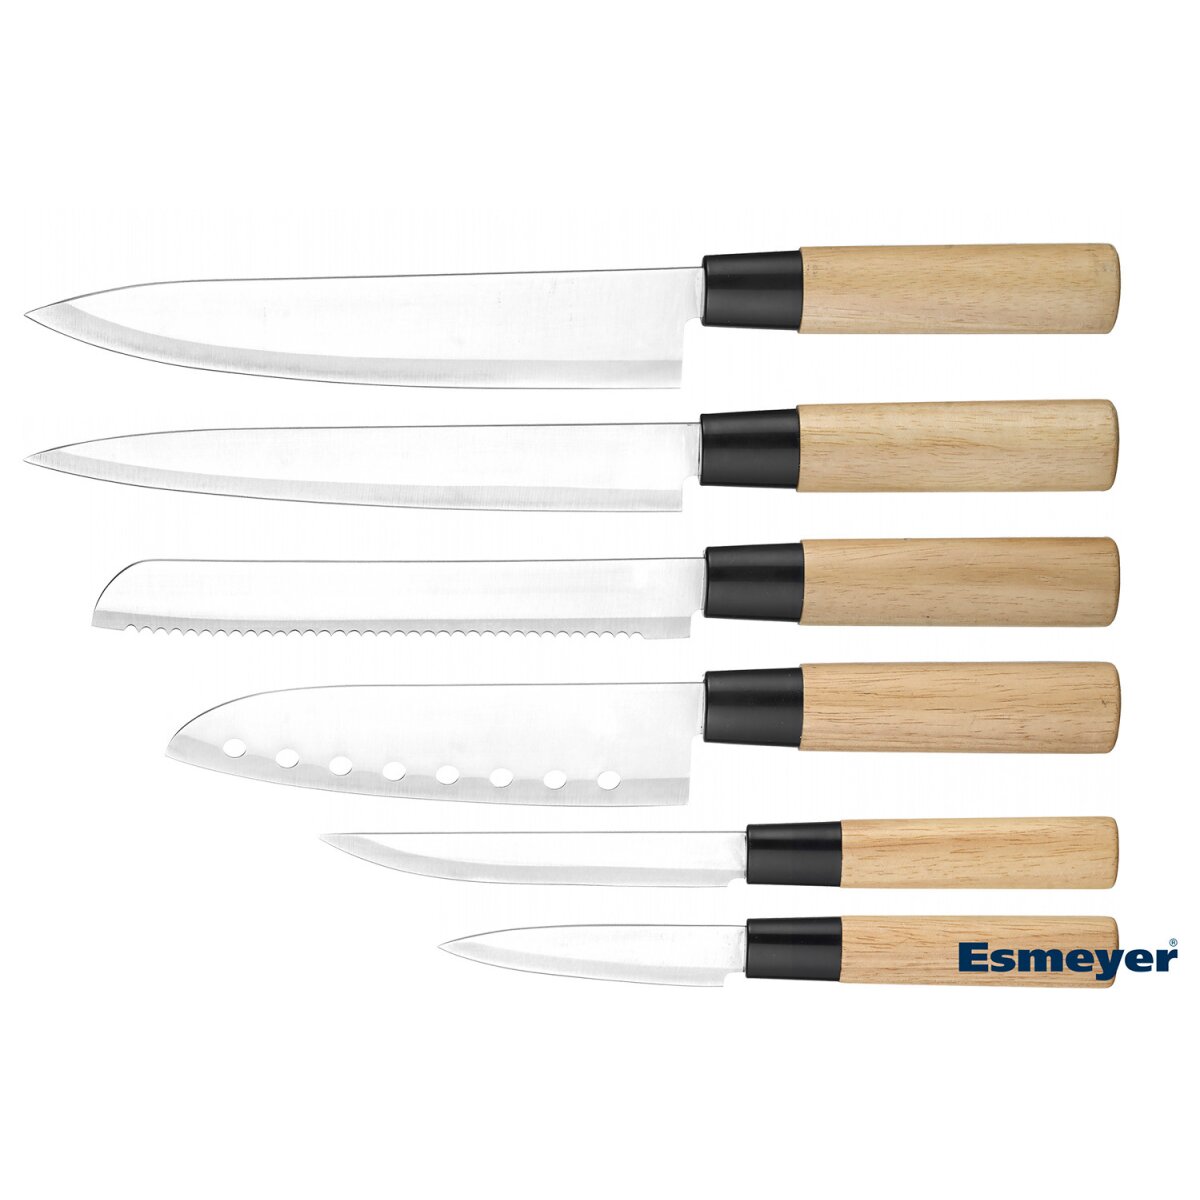 Esmeyer Asia Messerset 6-teilig aus Edelstahl/Holzgriff - B-Ware neuwertig,  20,99 €